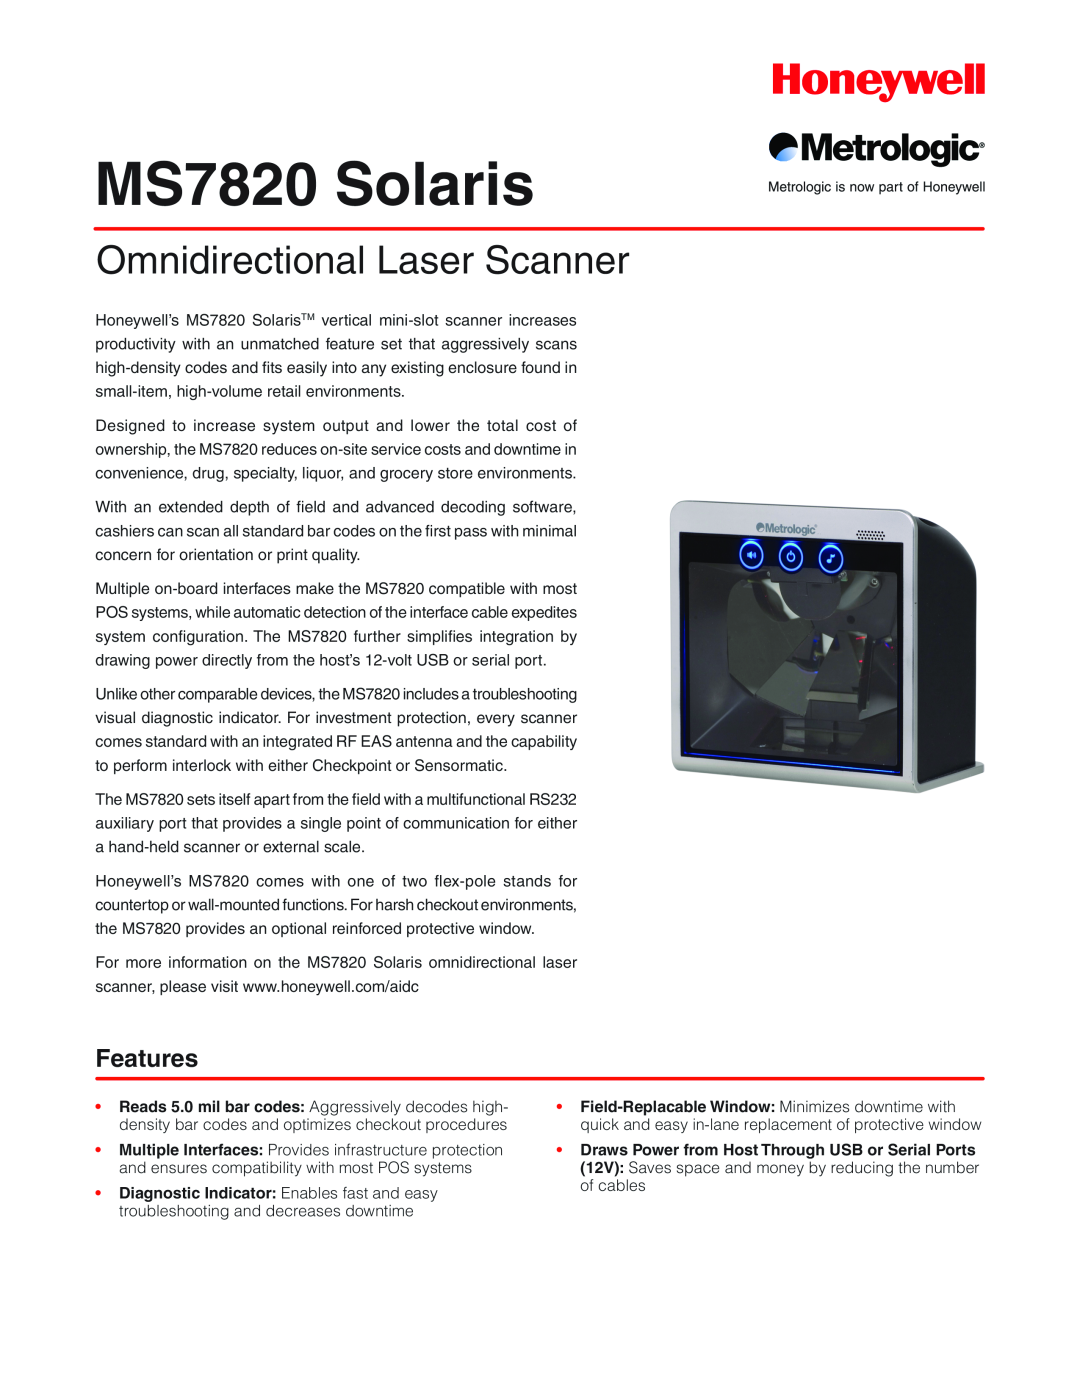 Metrologic Instruments manual MS7820 Solaris, Omnidirectional Laser Scanner, Features 